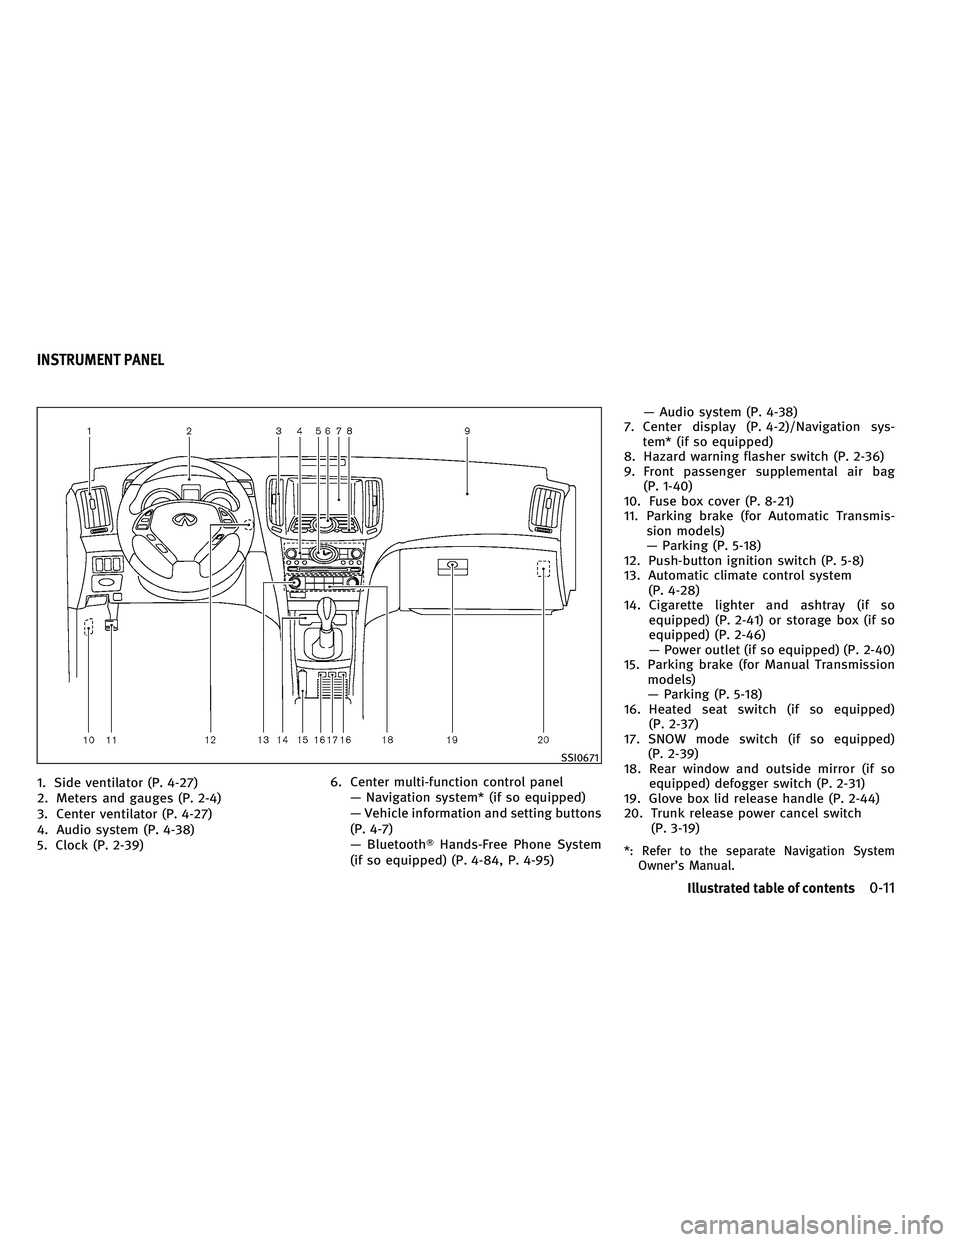 INFINITI G 2011  Owners Manual 1. Side ventilator (P. 4-27)
2. Meters and gauges (P. 2-4)
3. Center ventilator (P. 4-27)
4. Audio system (P. 4-38)
5. Clock (P. 2-39)6. Center multi-function control panel
— Navigation system* (if 